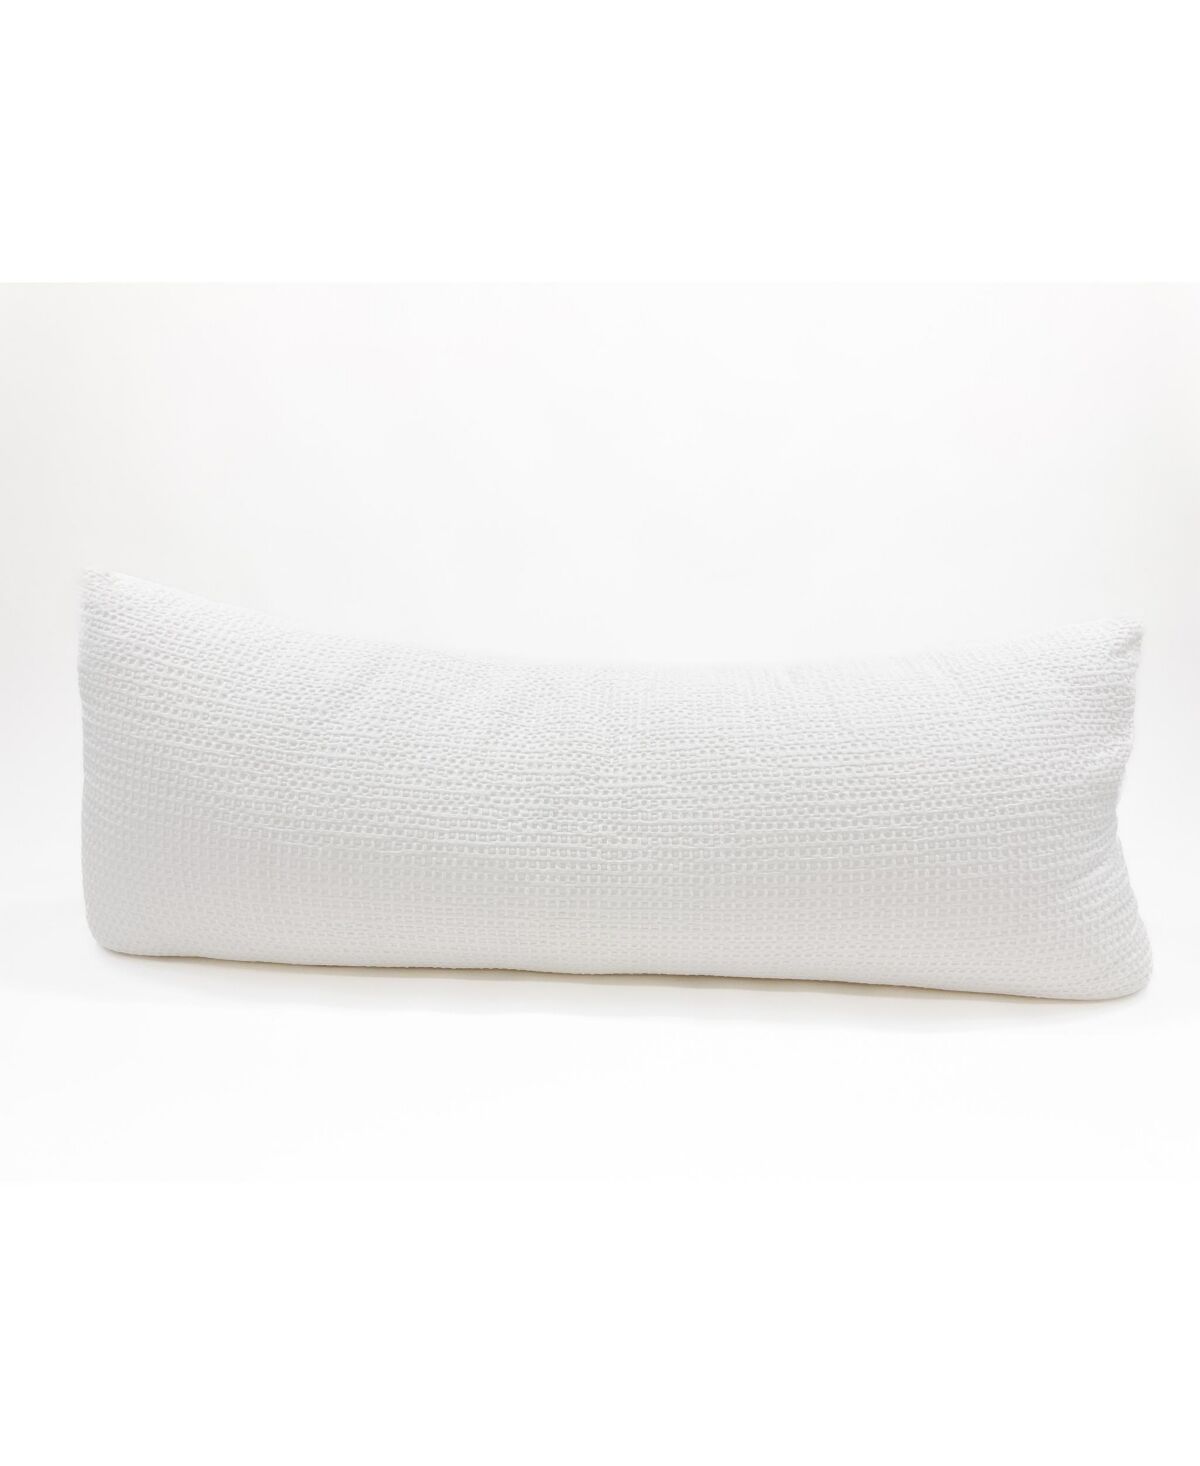 Anaya Home Body Pillow 20x54 Down Alternative White Cotton Waffle Weave - White